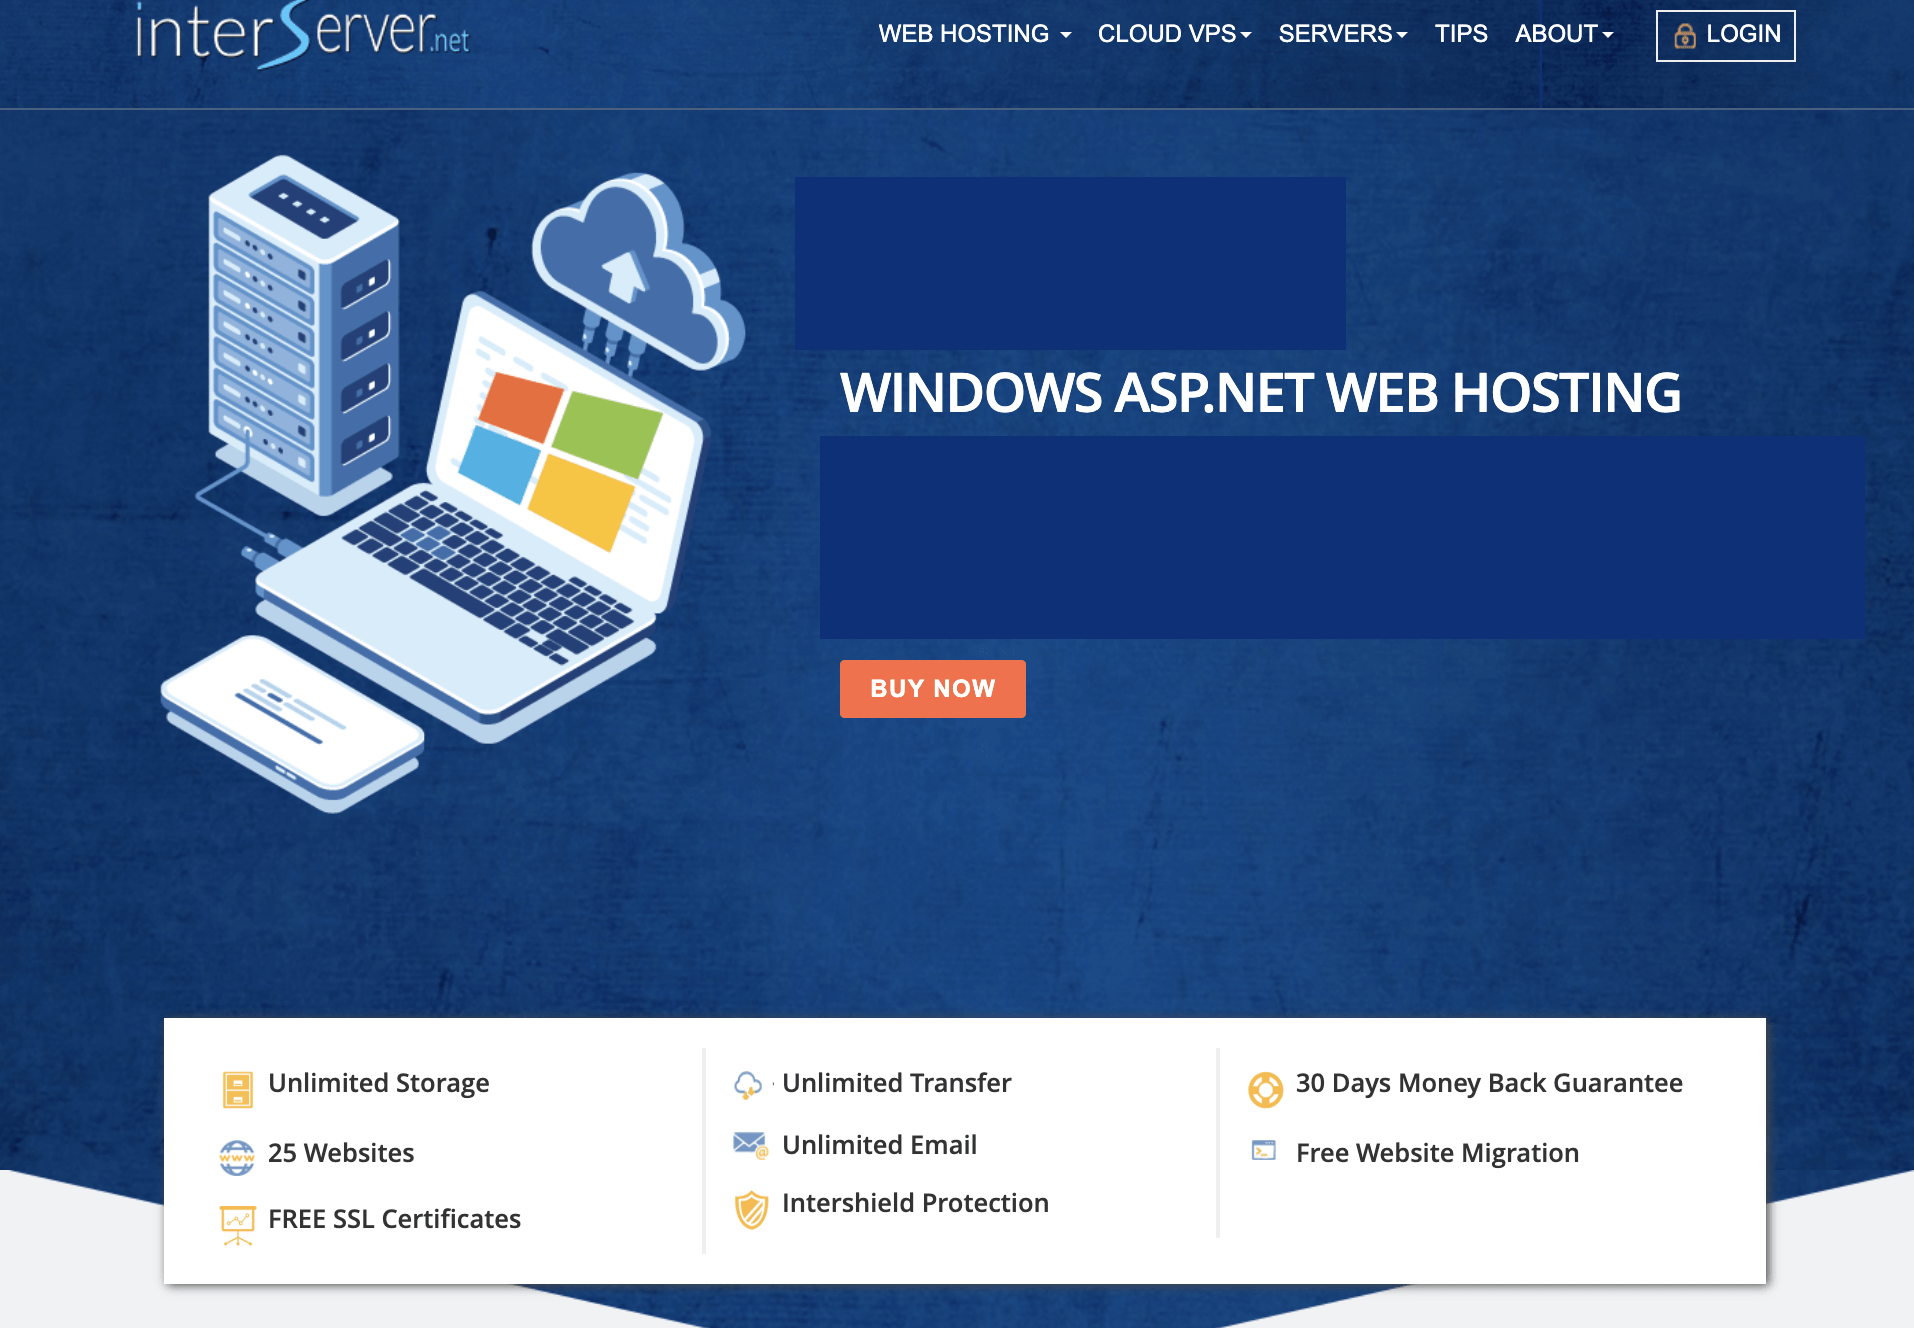 InterServer Windows ASP.NET Hosting